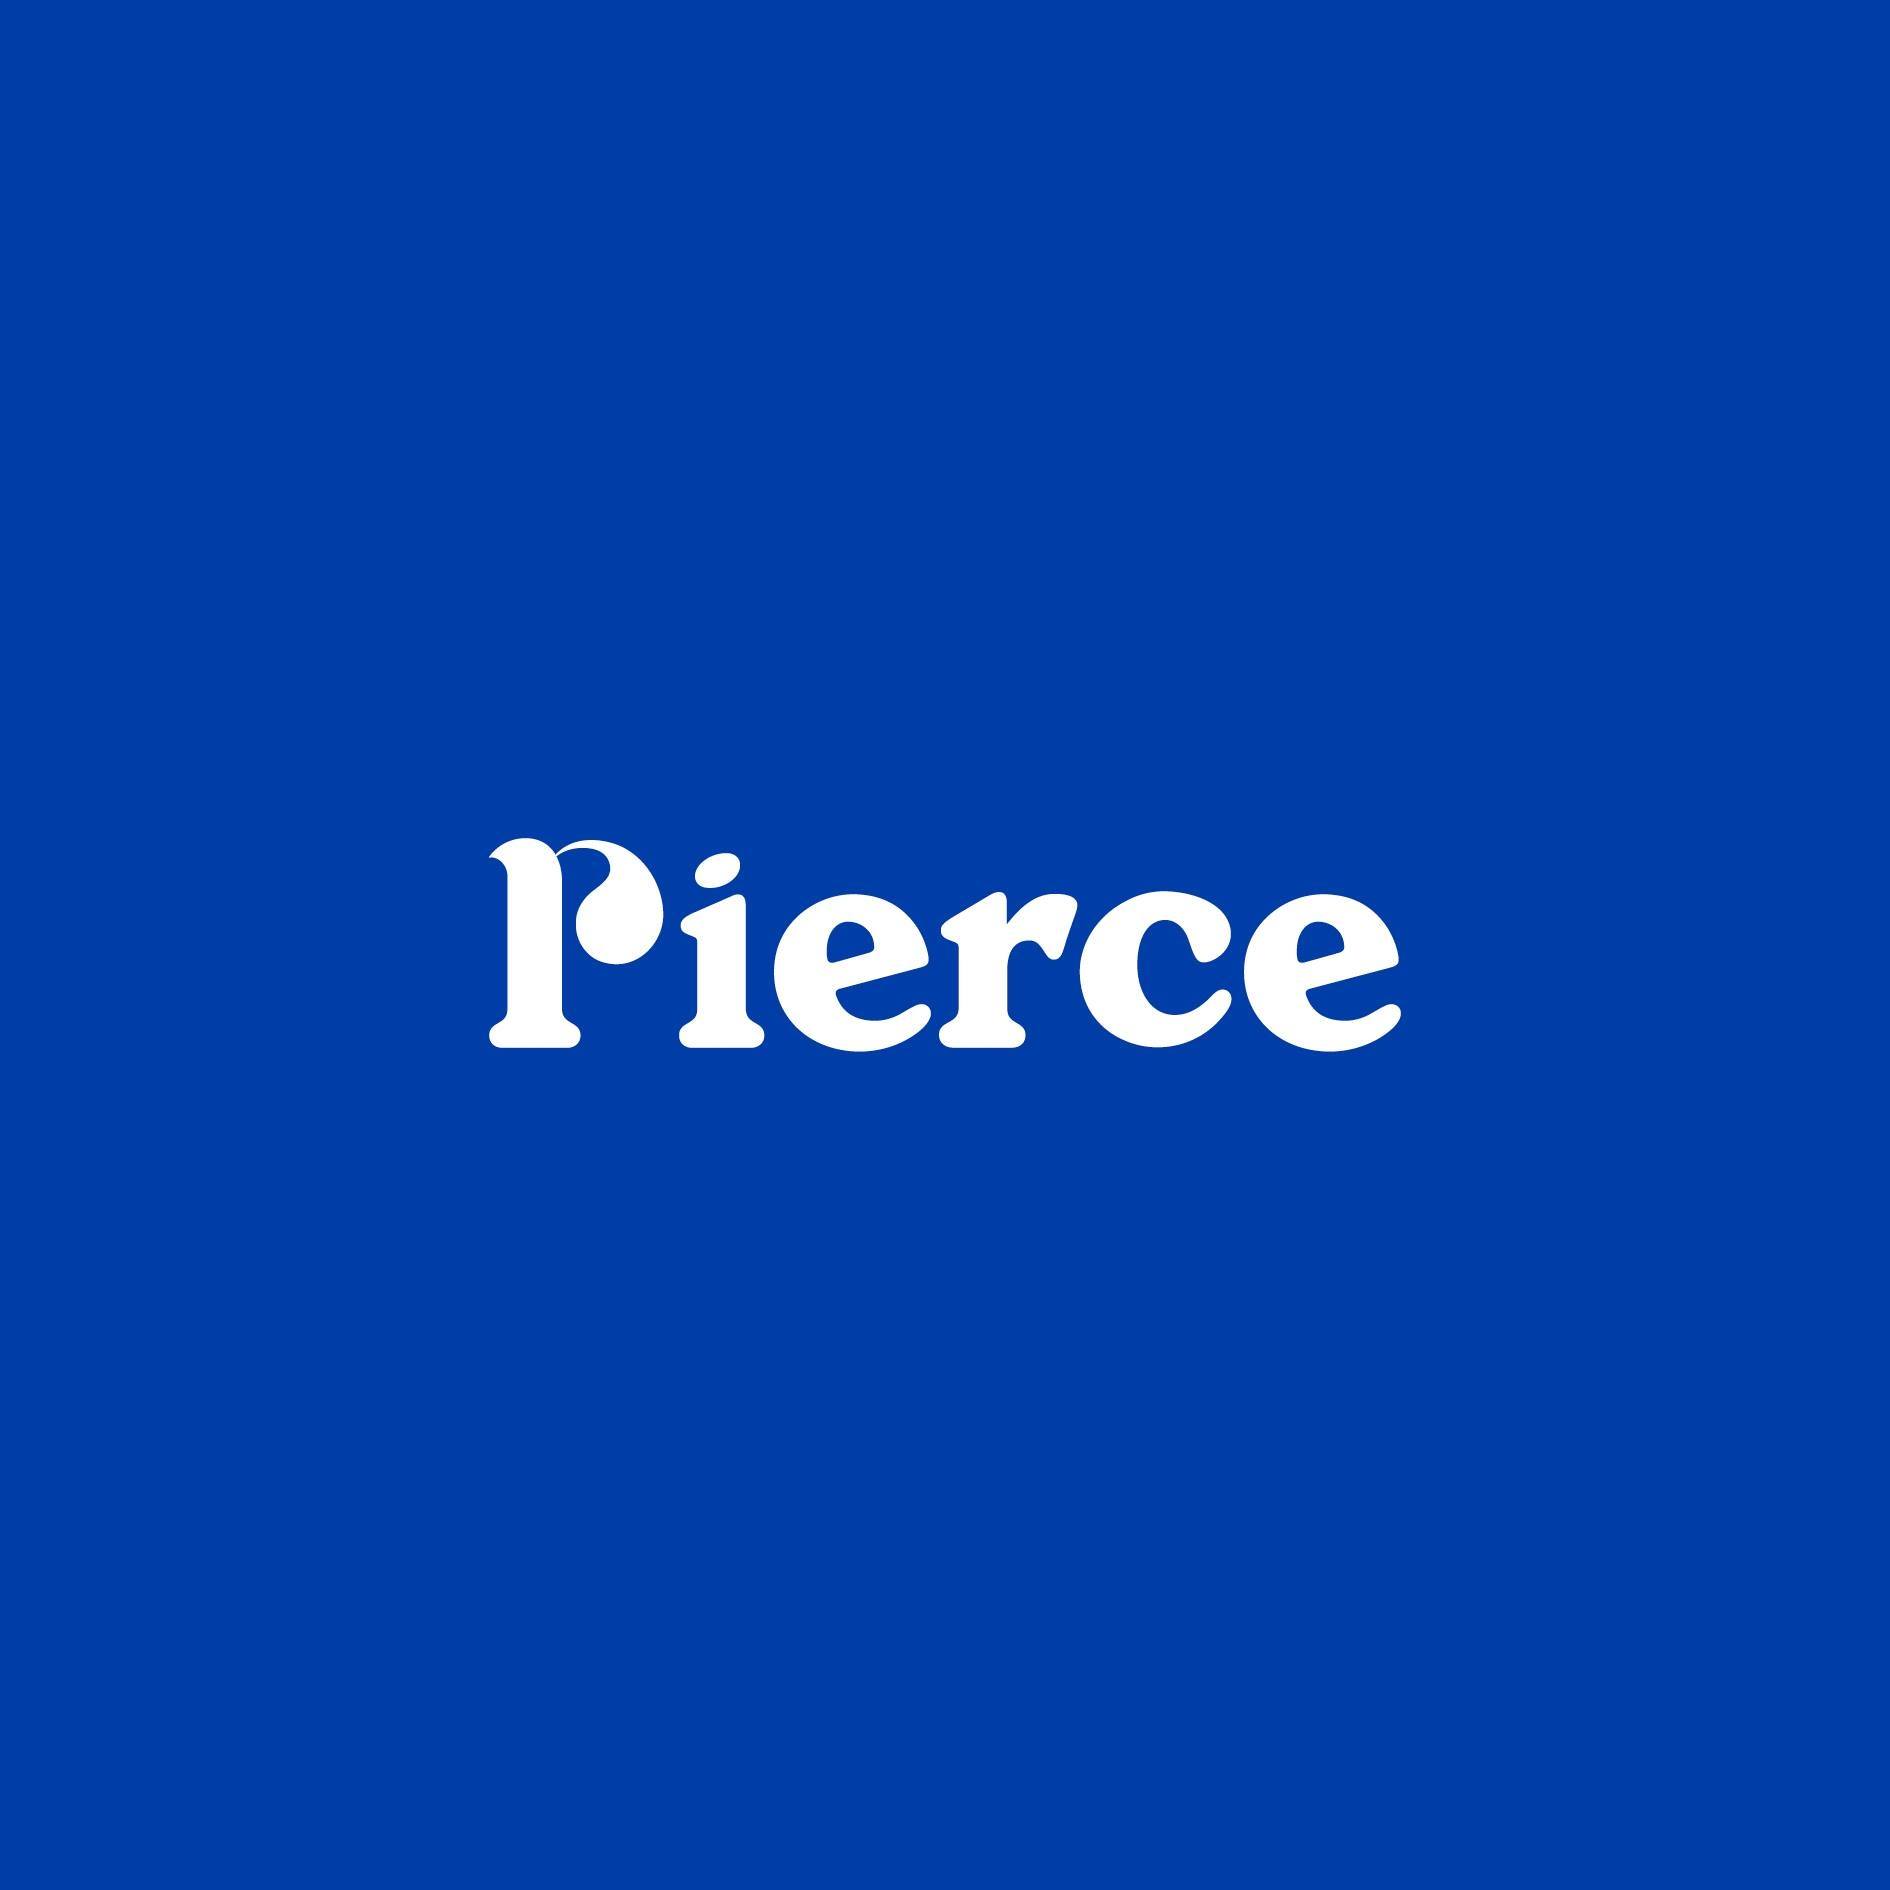 Company logo of Pierce Corporation